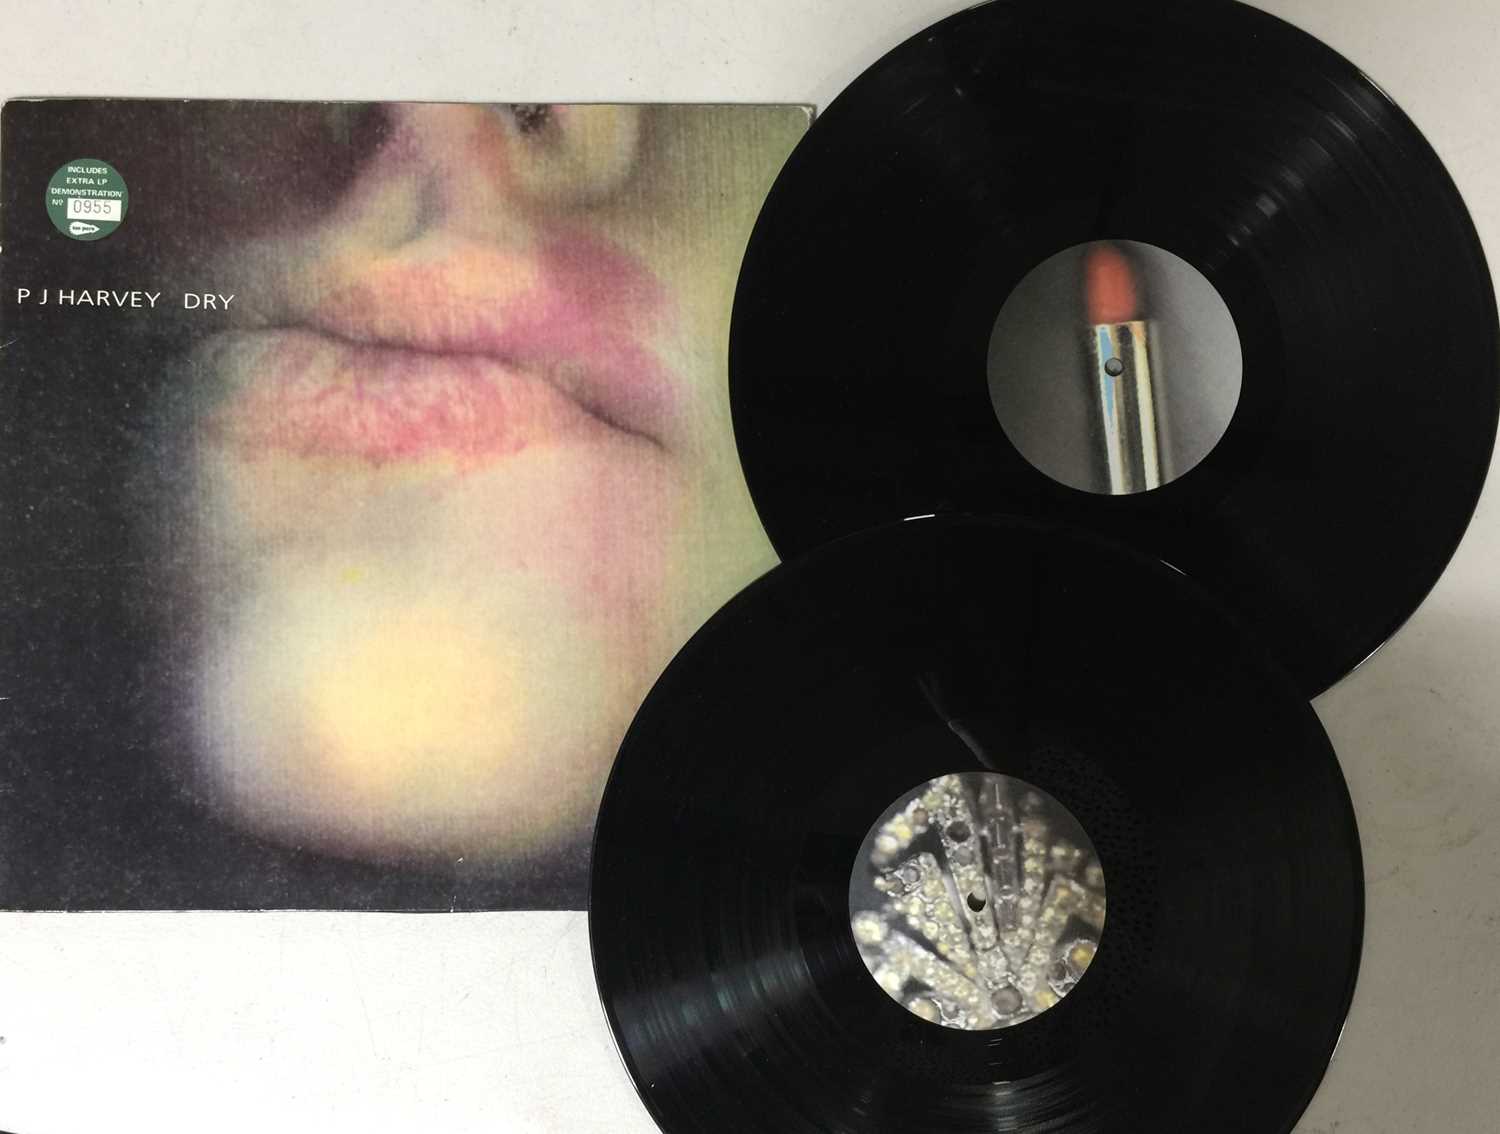 mikroskopisk Lade være med død Lot 67 - PJ HARVEY - DRY LP (ORIGINAL UK DOUBLE LP